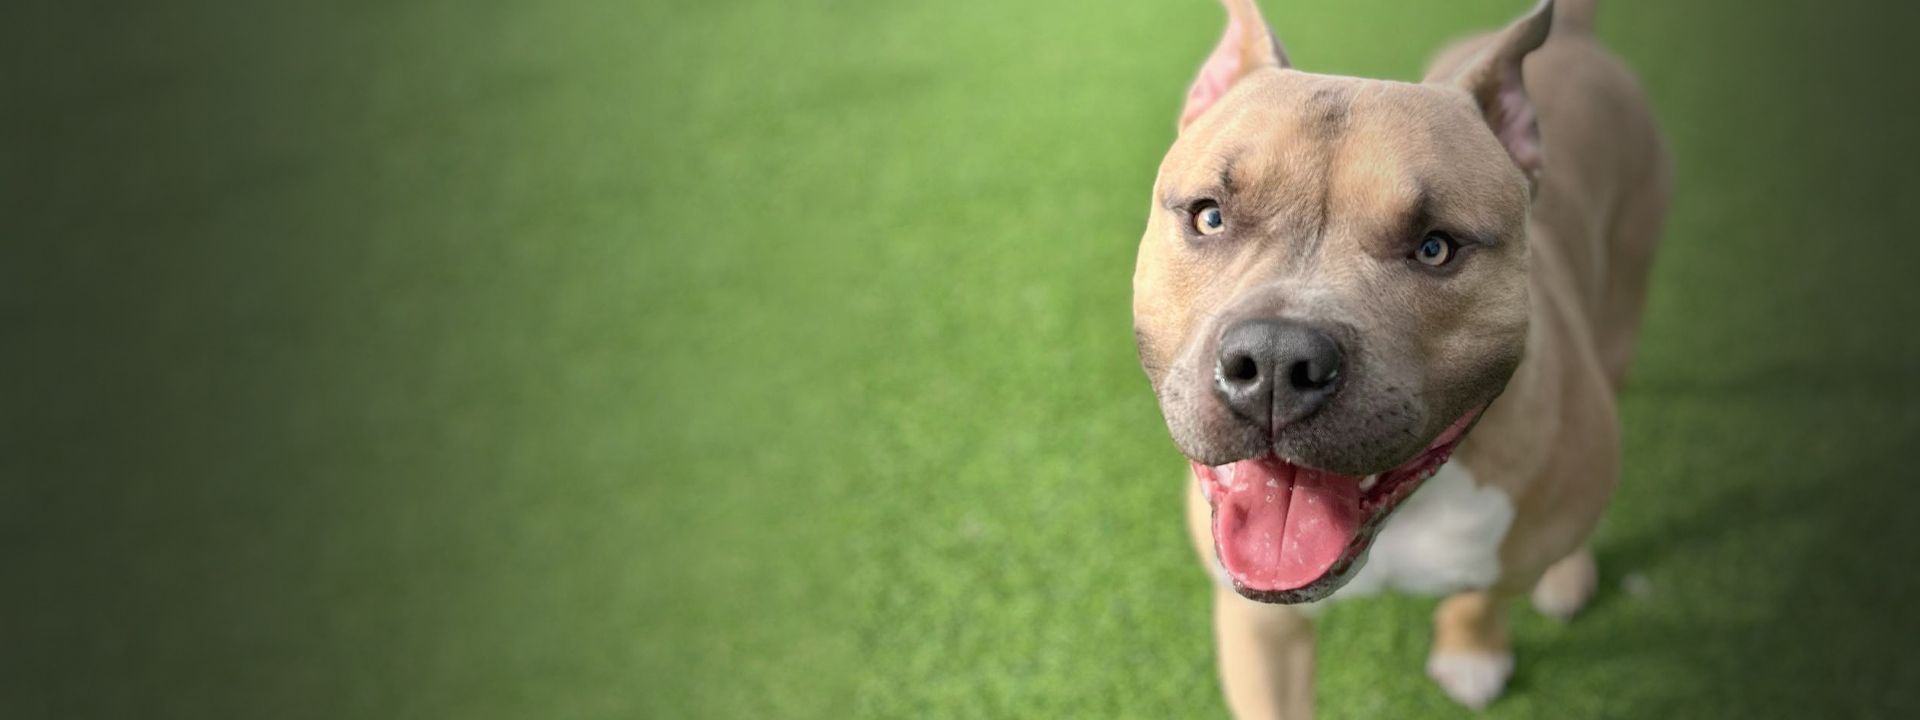 beautiful smiling pitbull dog